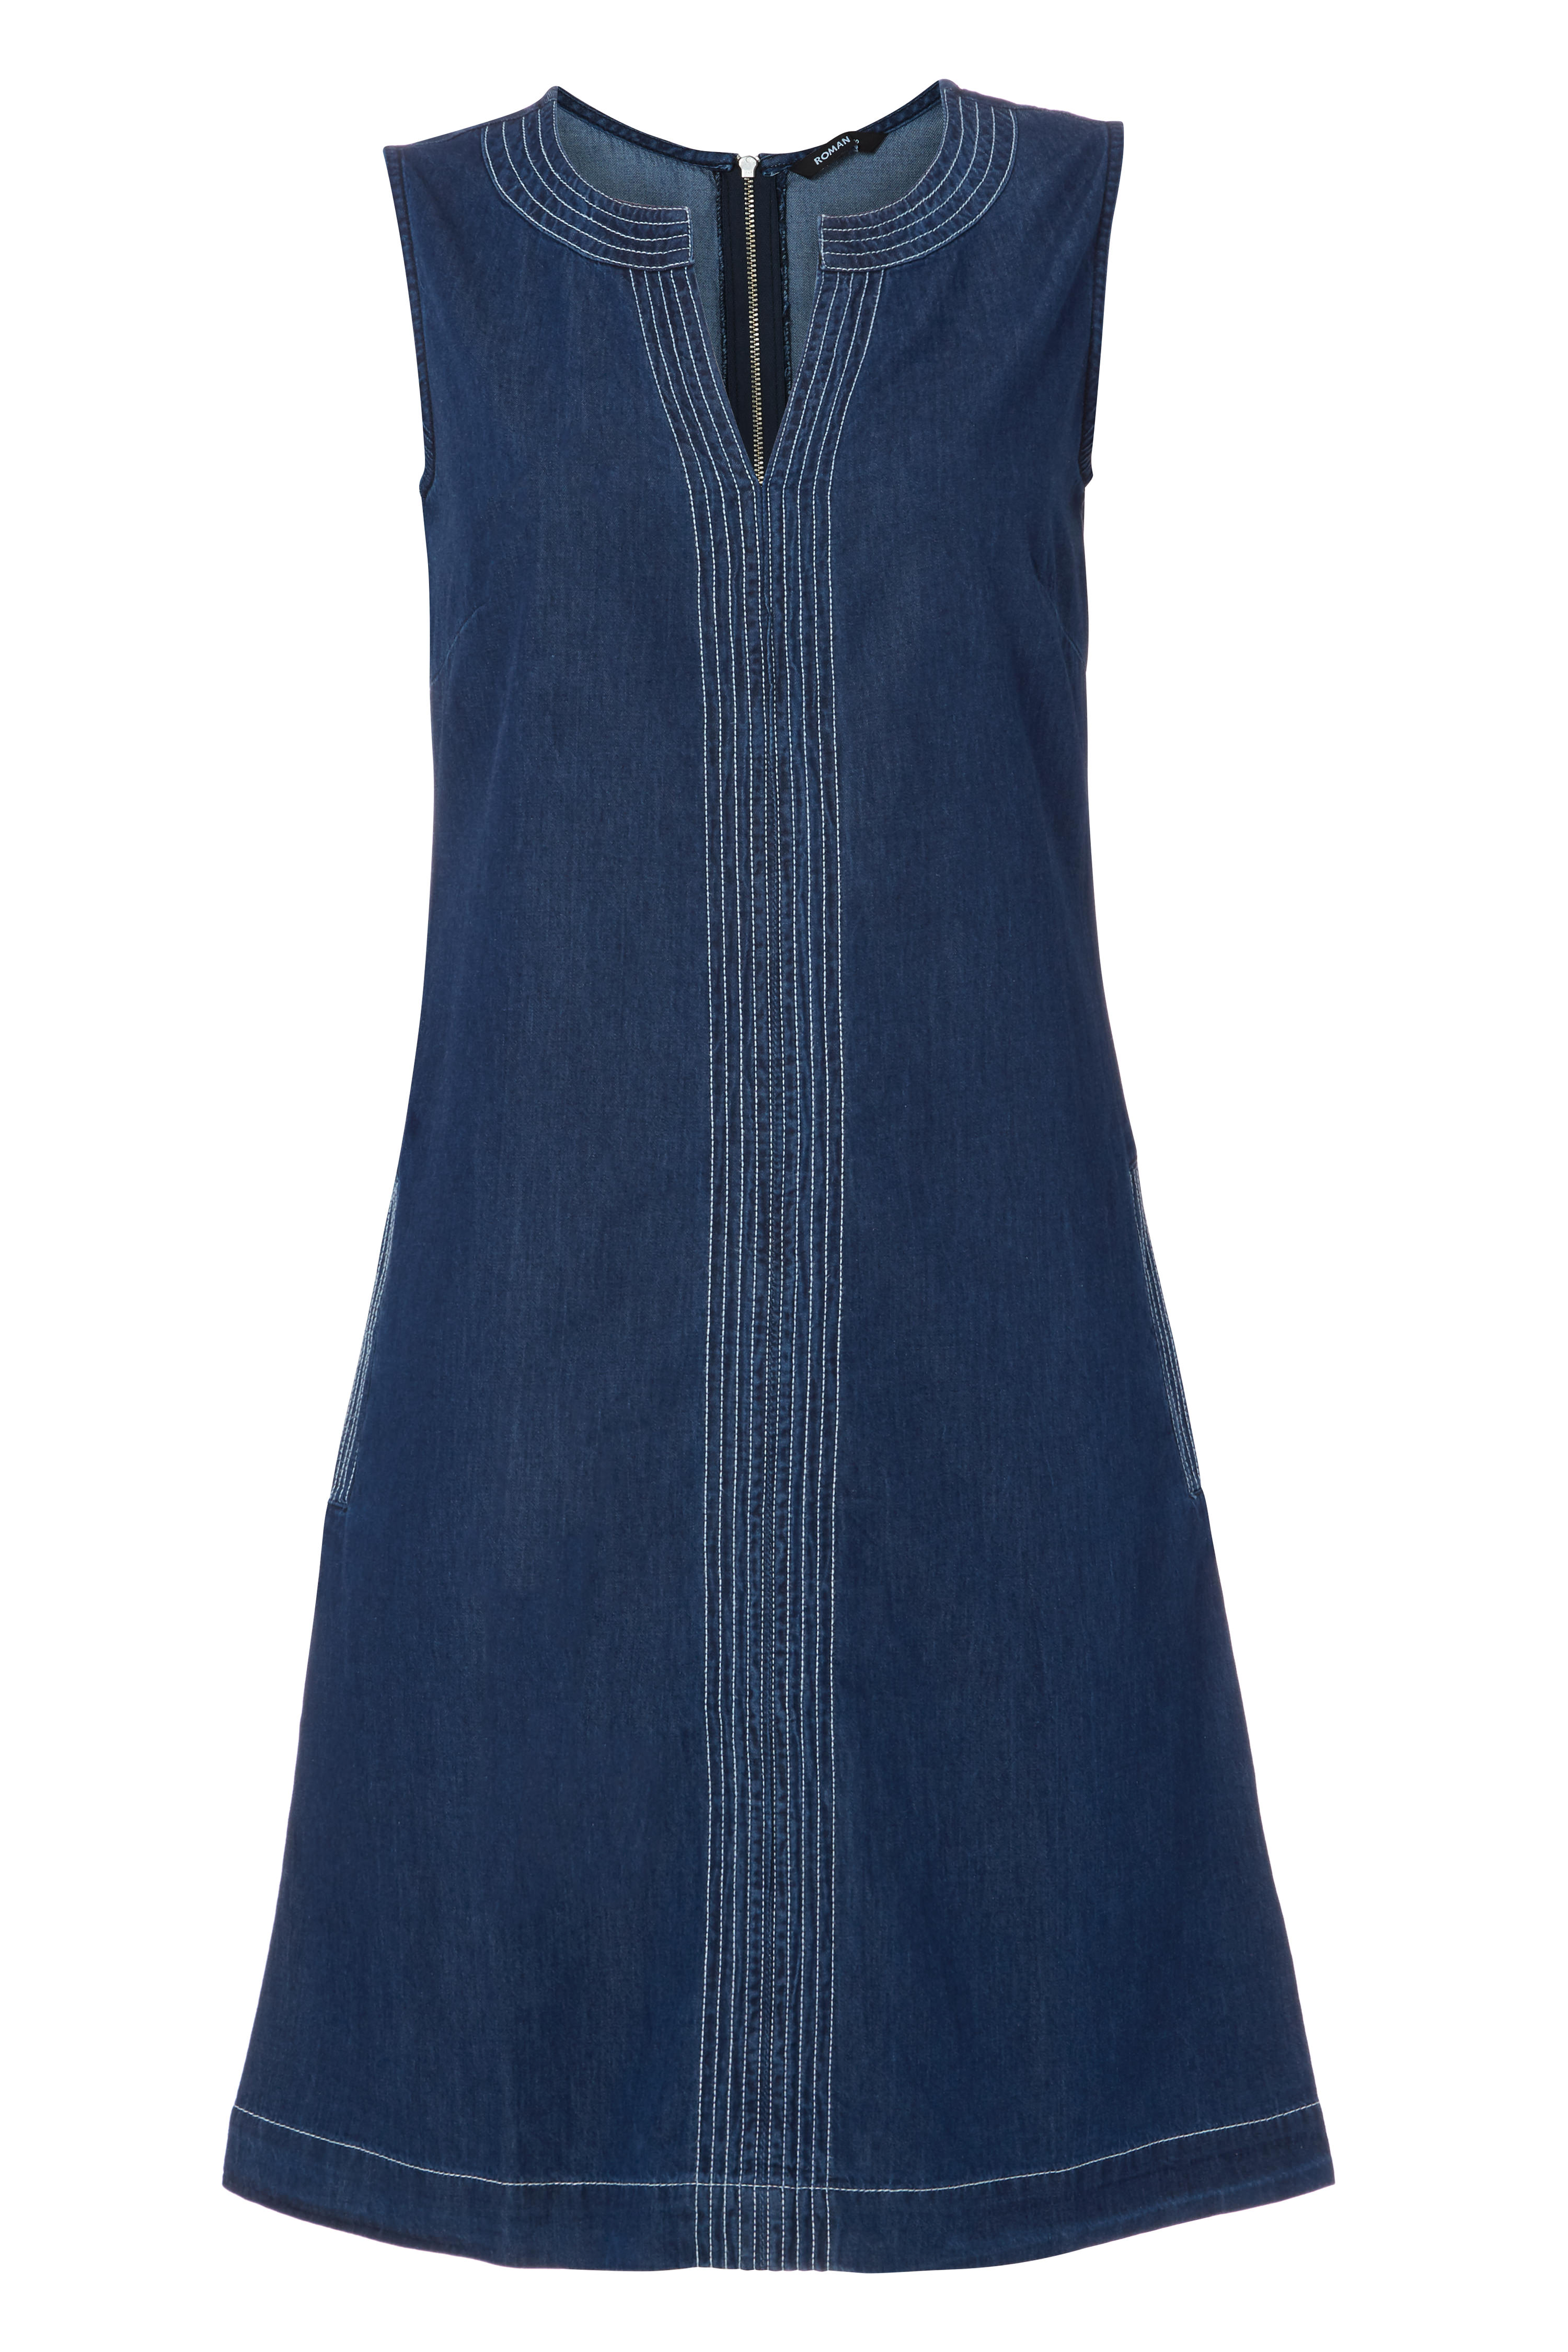 Denim Shift Dress in Blue - Roman Originals UK